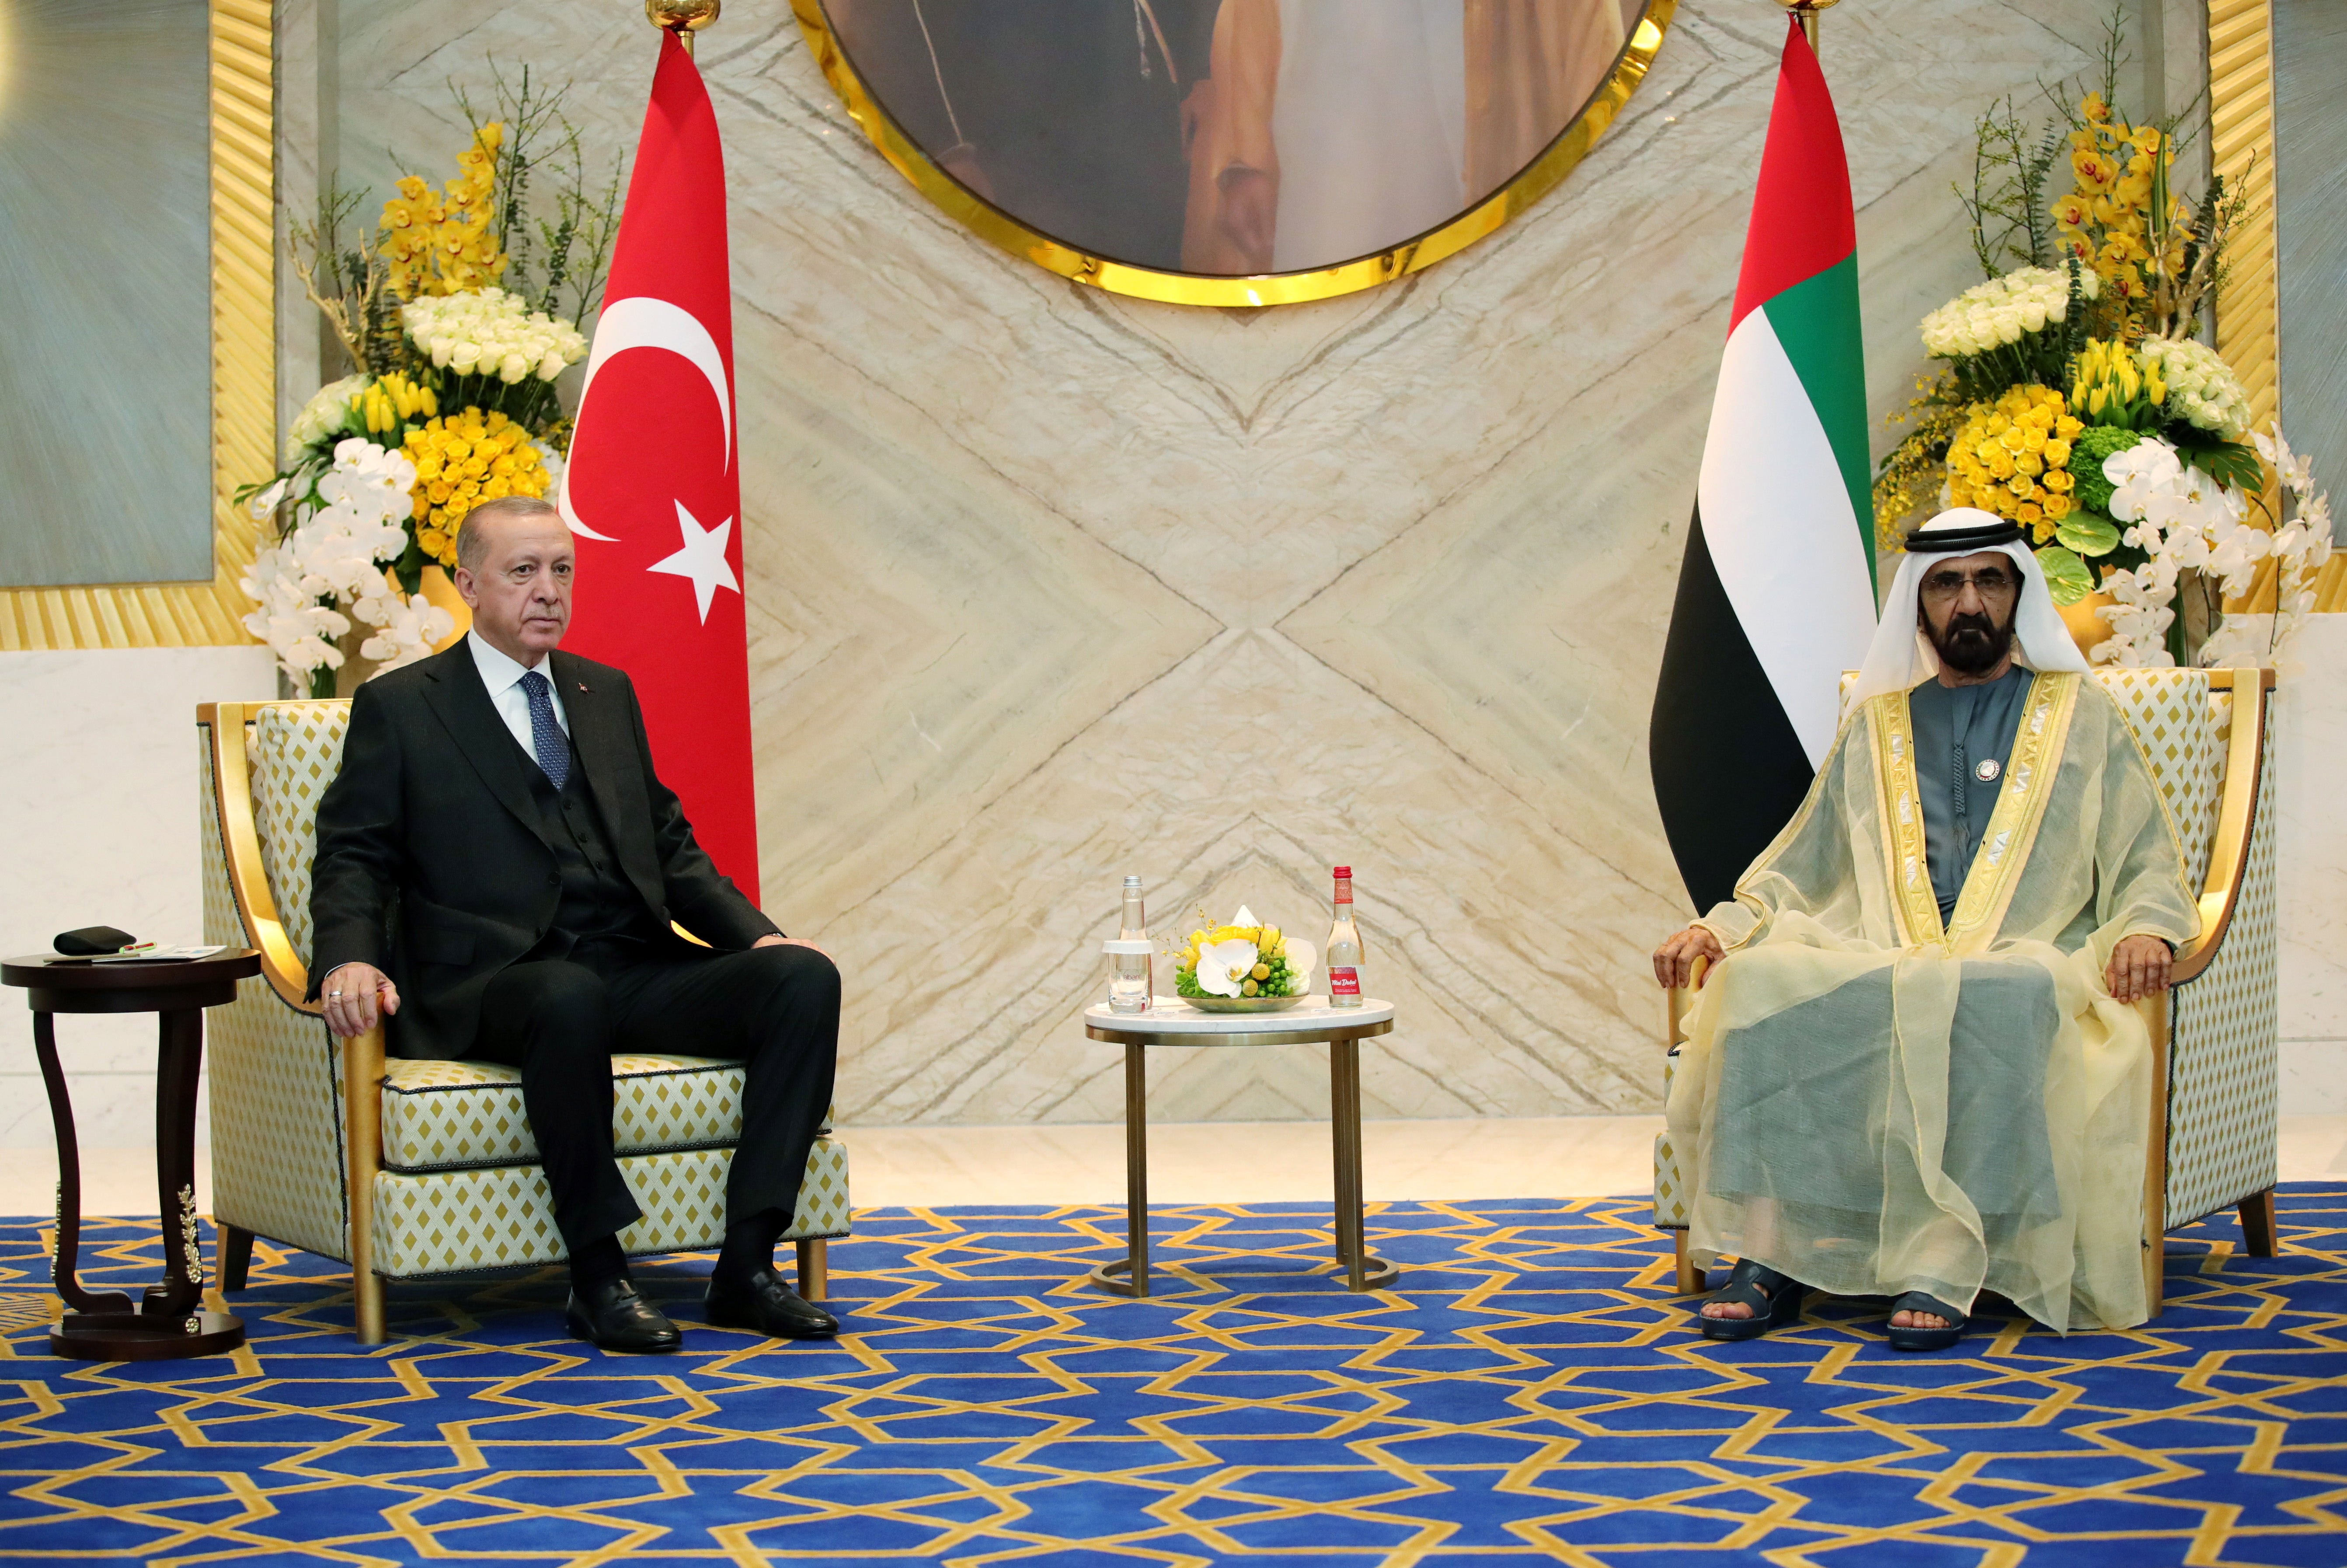 Ruler of Dubai and UAE Prime Minister Mohammed bin Rashid Al Maktoum (R) and Turkish President Recep Tayyip Erdogan (L) during their meeting in Dubai, United Arab Emirates, 15 February 2022